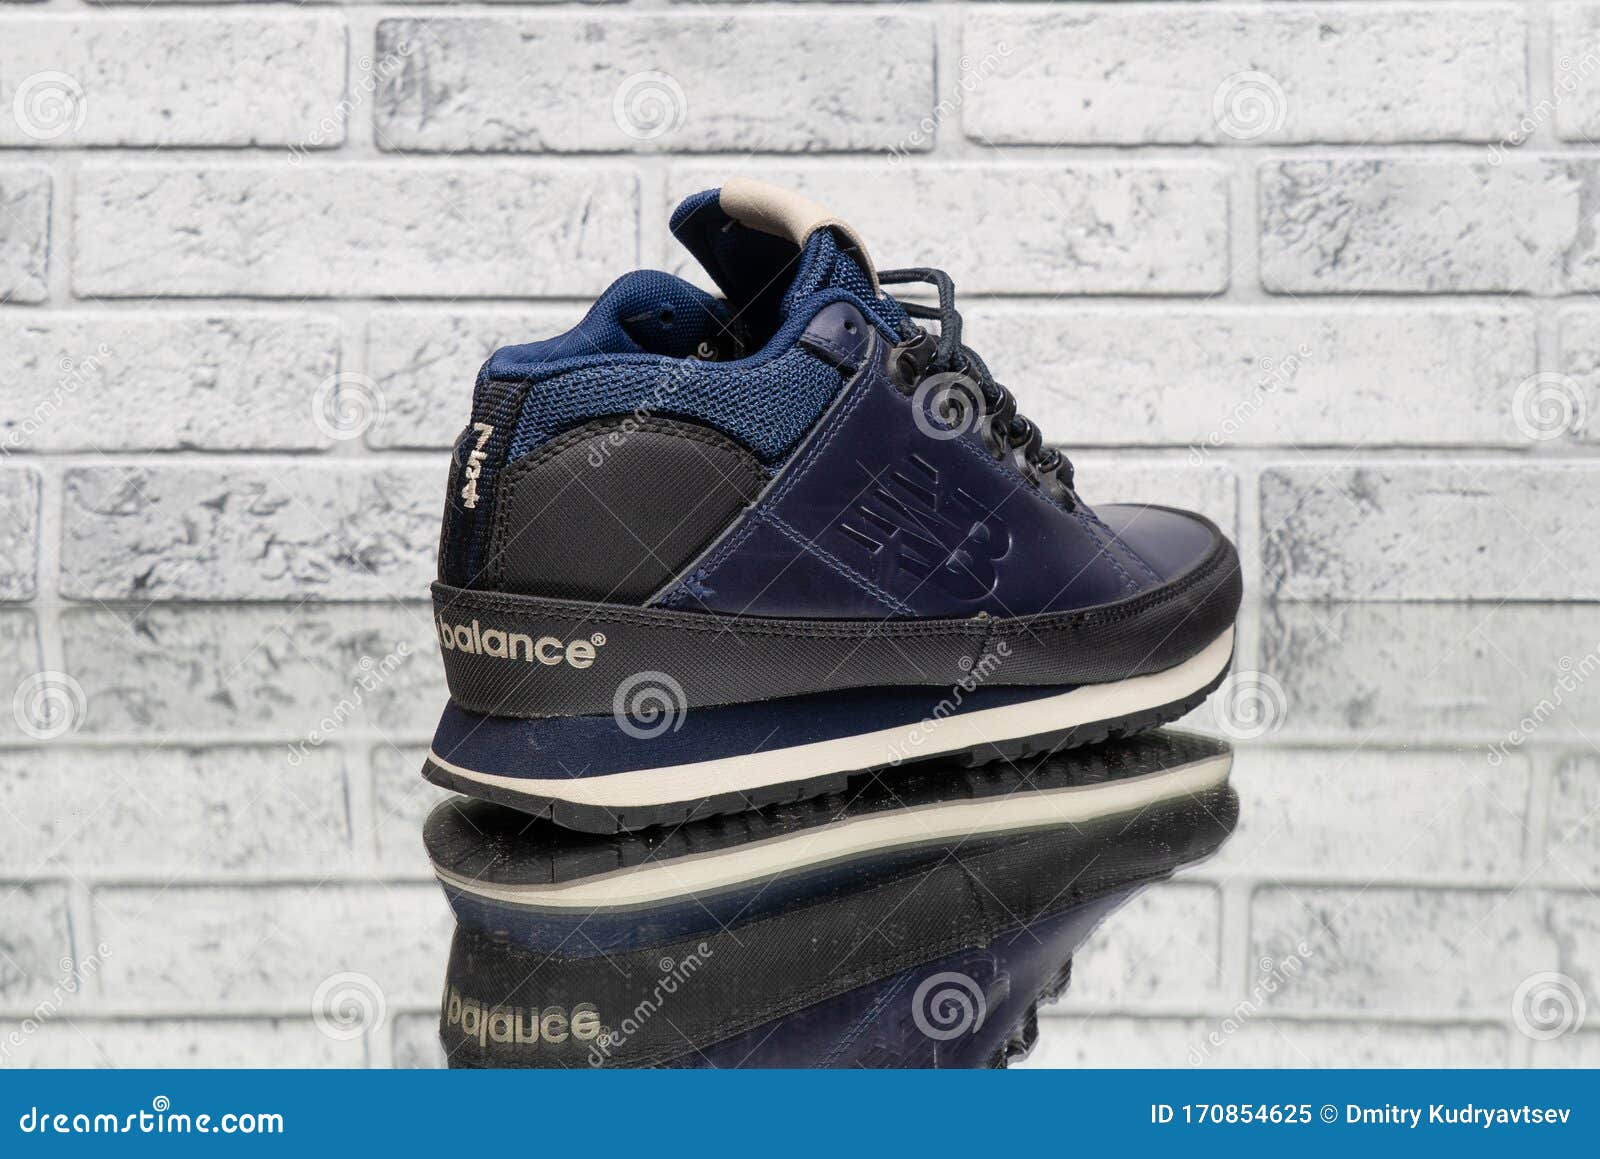 rechtbank Beeldhouwer Boost New Balance 754 Fur Leather Dark Navy Sneakers. Editorial Image - Image of  brick, balenciaga: 170854625